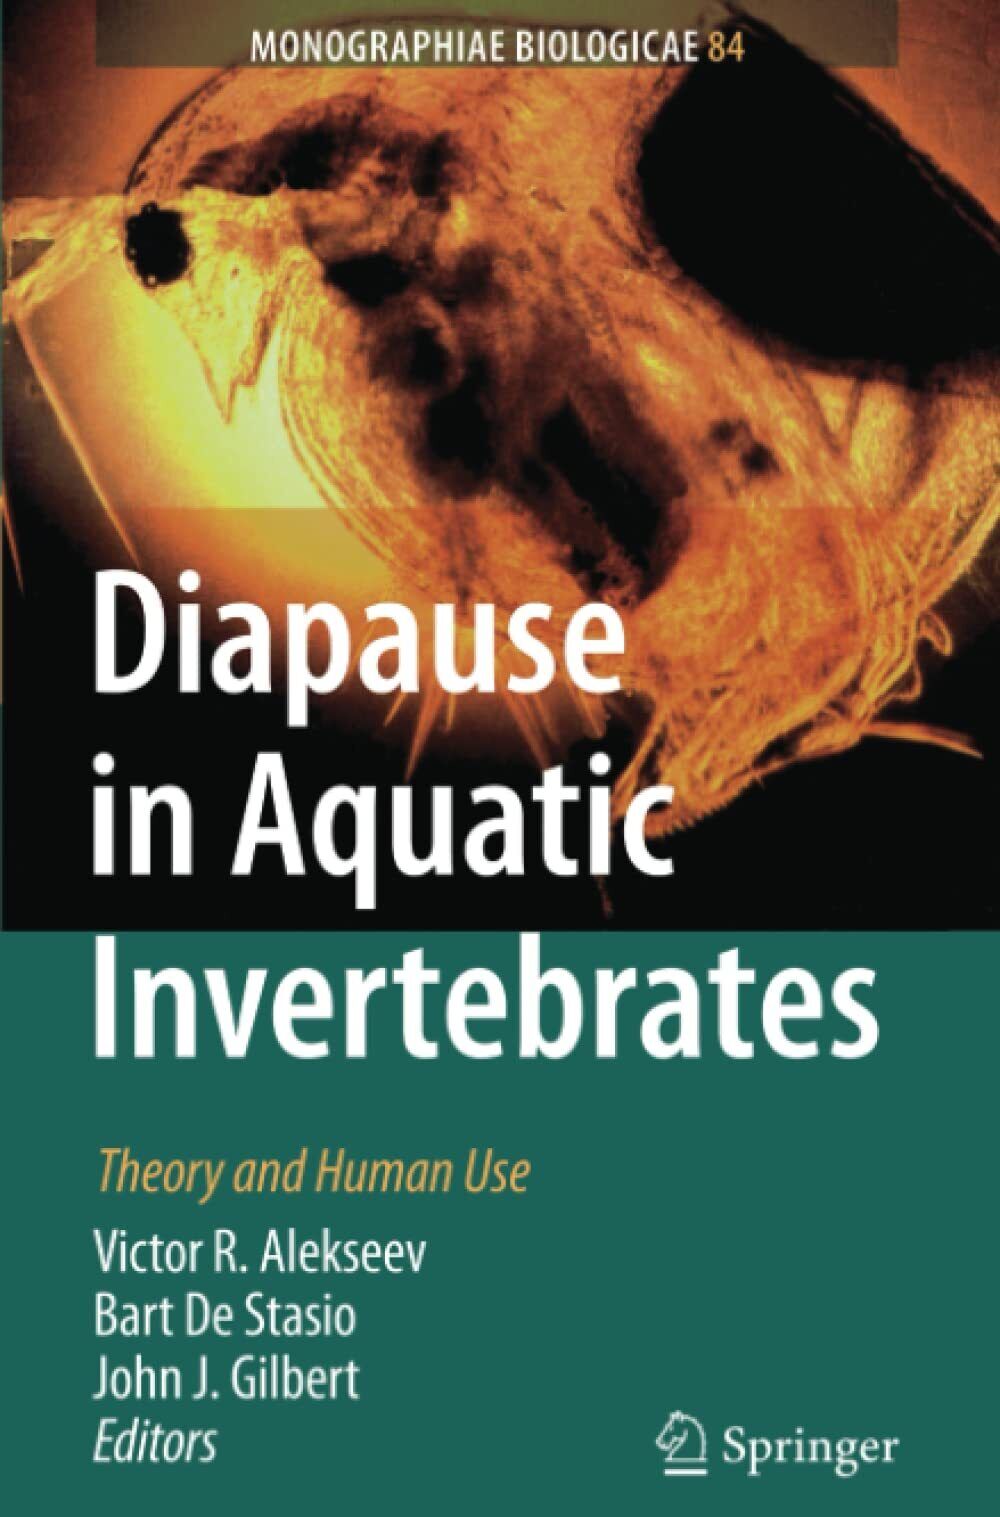 Diapause in Aquatic Invertebrates - Victor R. Alekseev - Springer, 2010